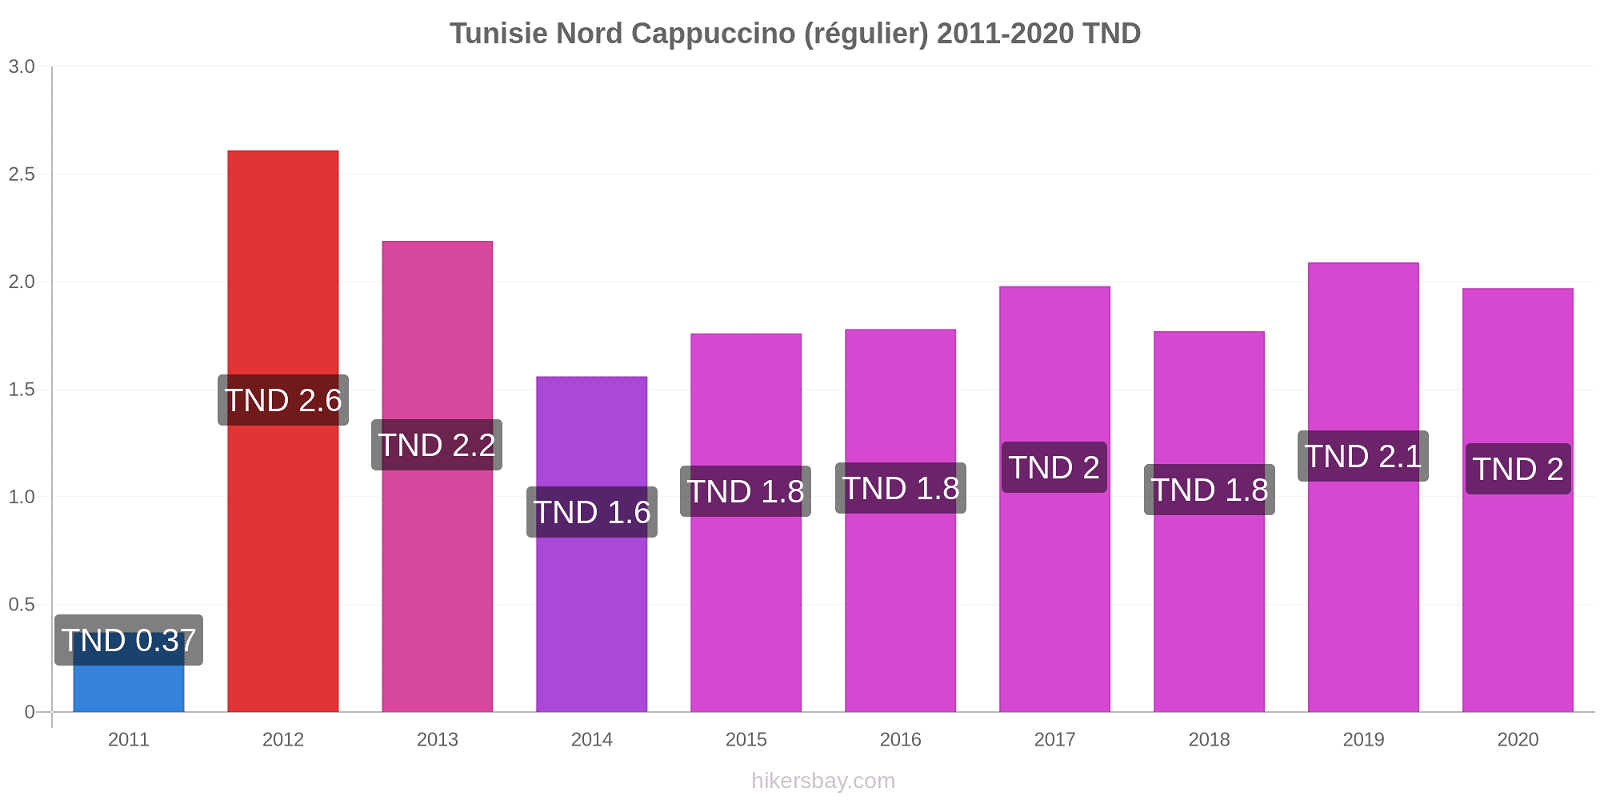 Tunisie Nord changements de prix Cappuccino (régulier) hikersbay.com